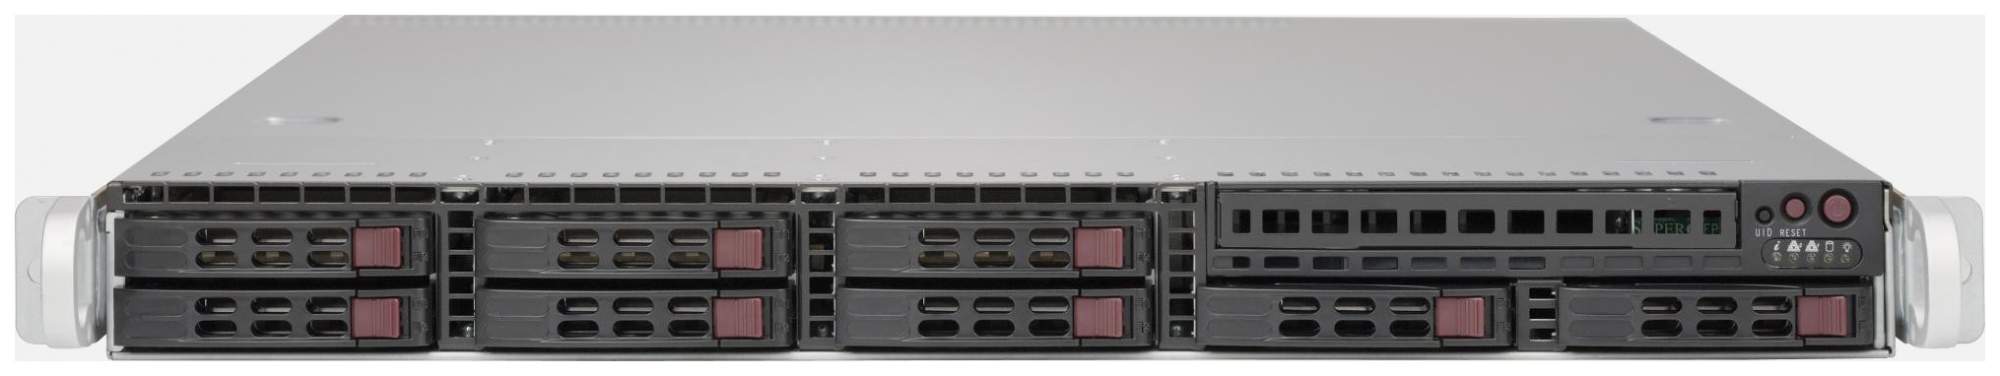 Подробное фото Сервер Supermicro 1027R 2*Xeon  E5-2620 32Gb 10600R DDR3 8x noHDD 2.5"  RAID LSI 2208 SAS/SATA/SSD, 2xPSU 500W